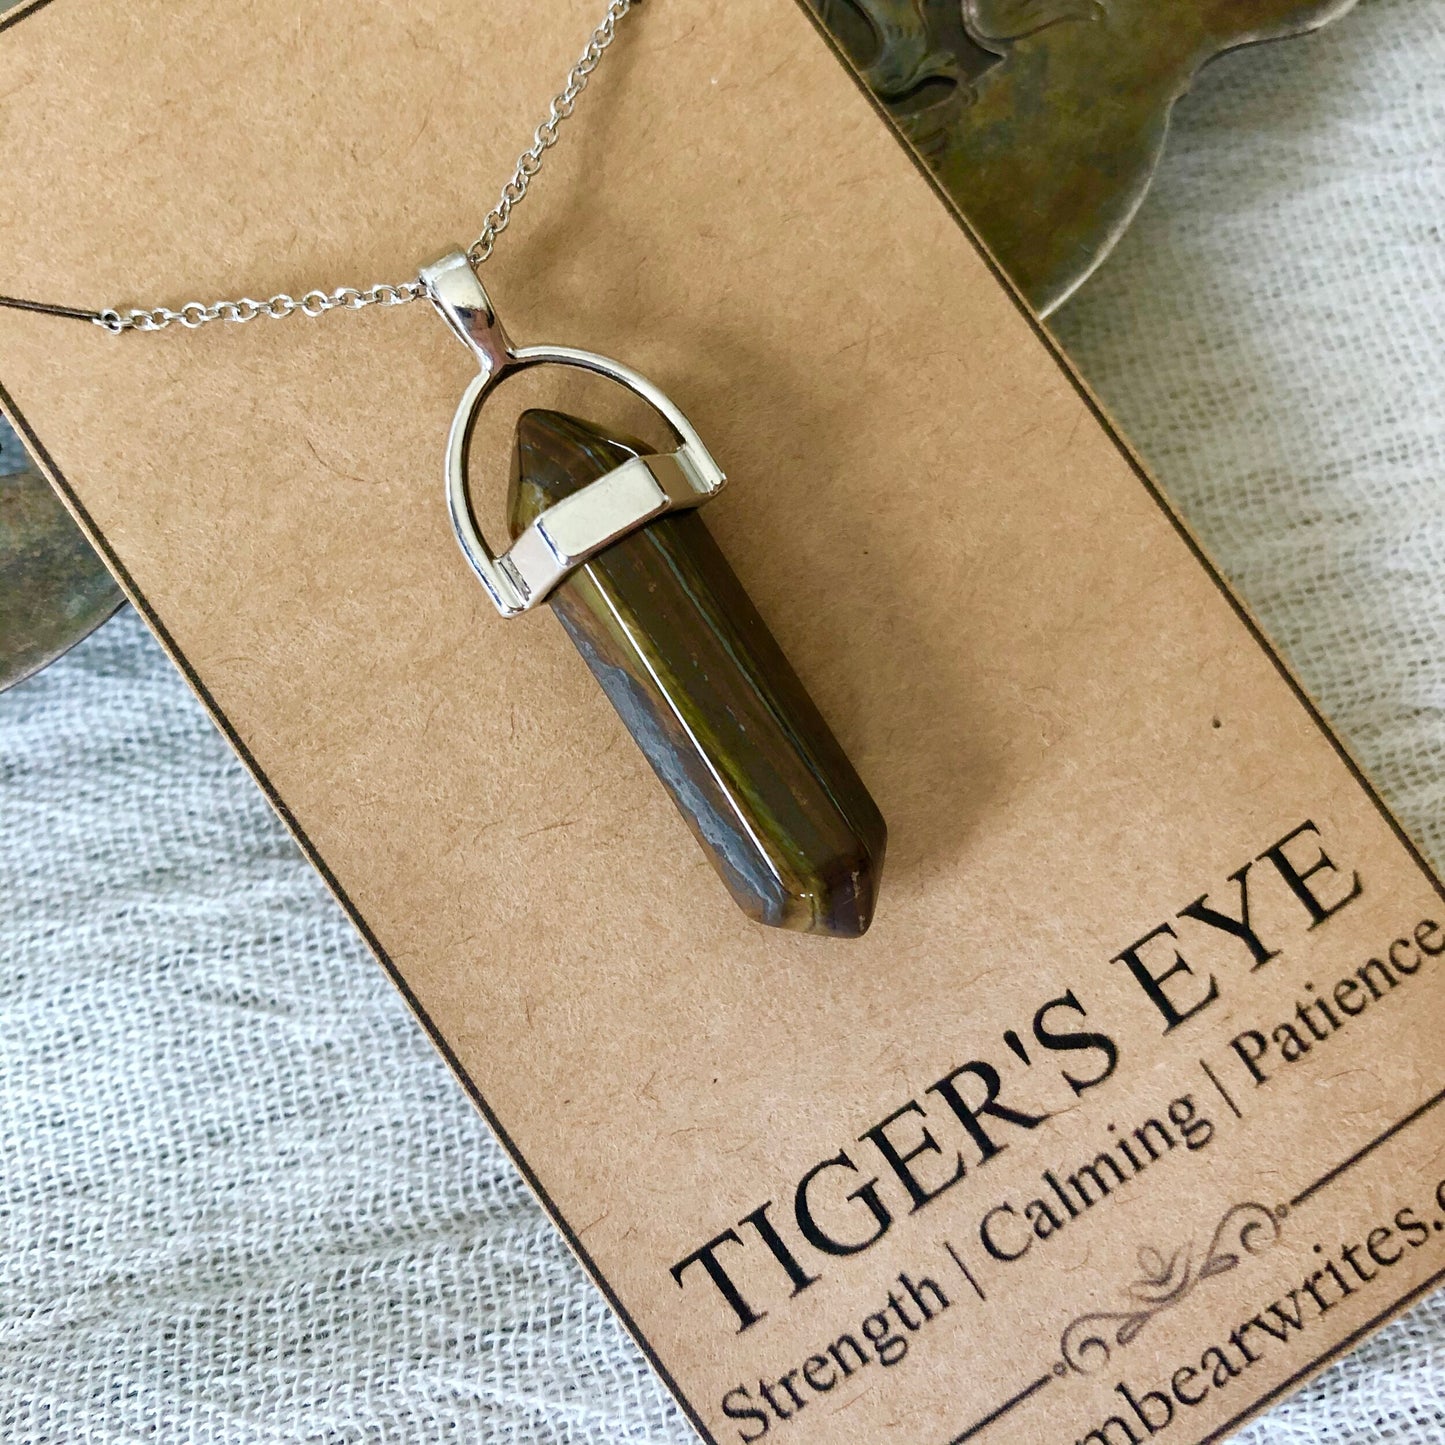 Tiger's Eye - Natural Gemstone Necklace